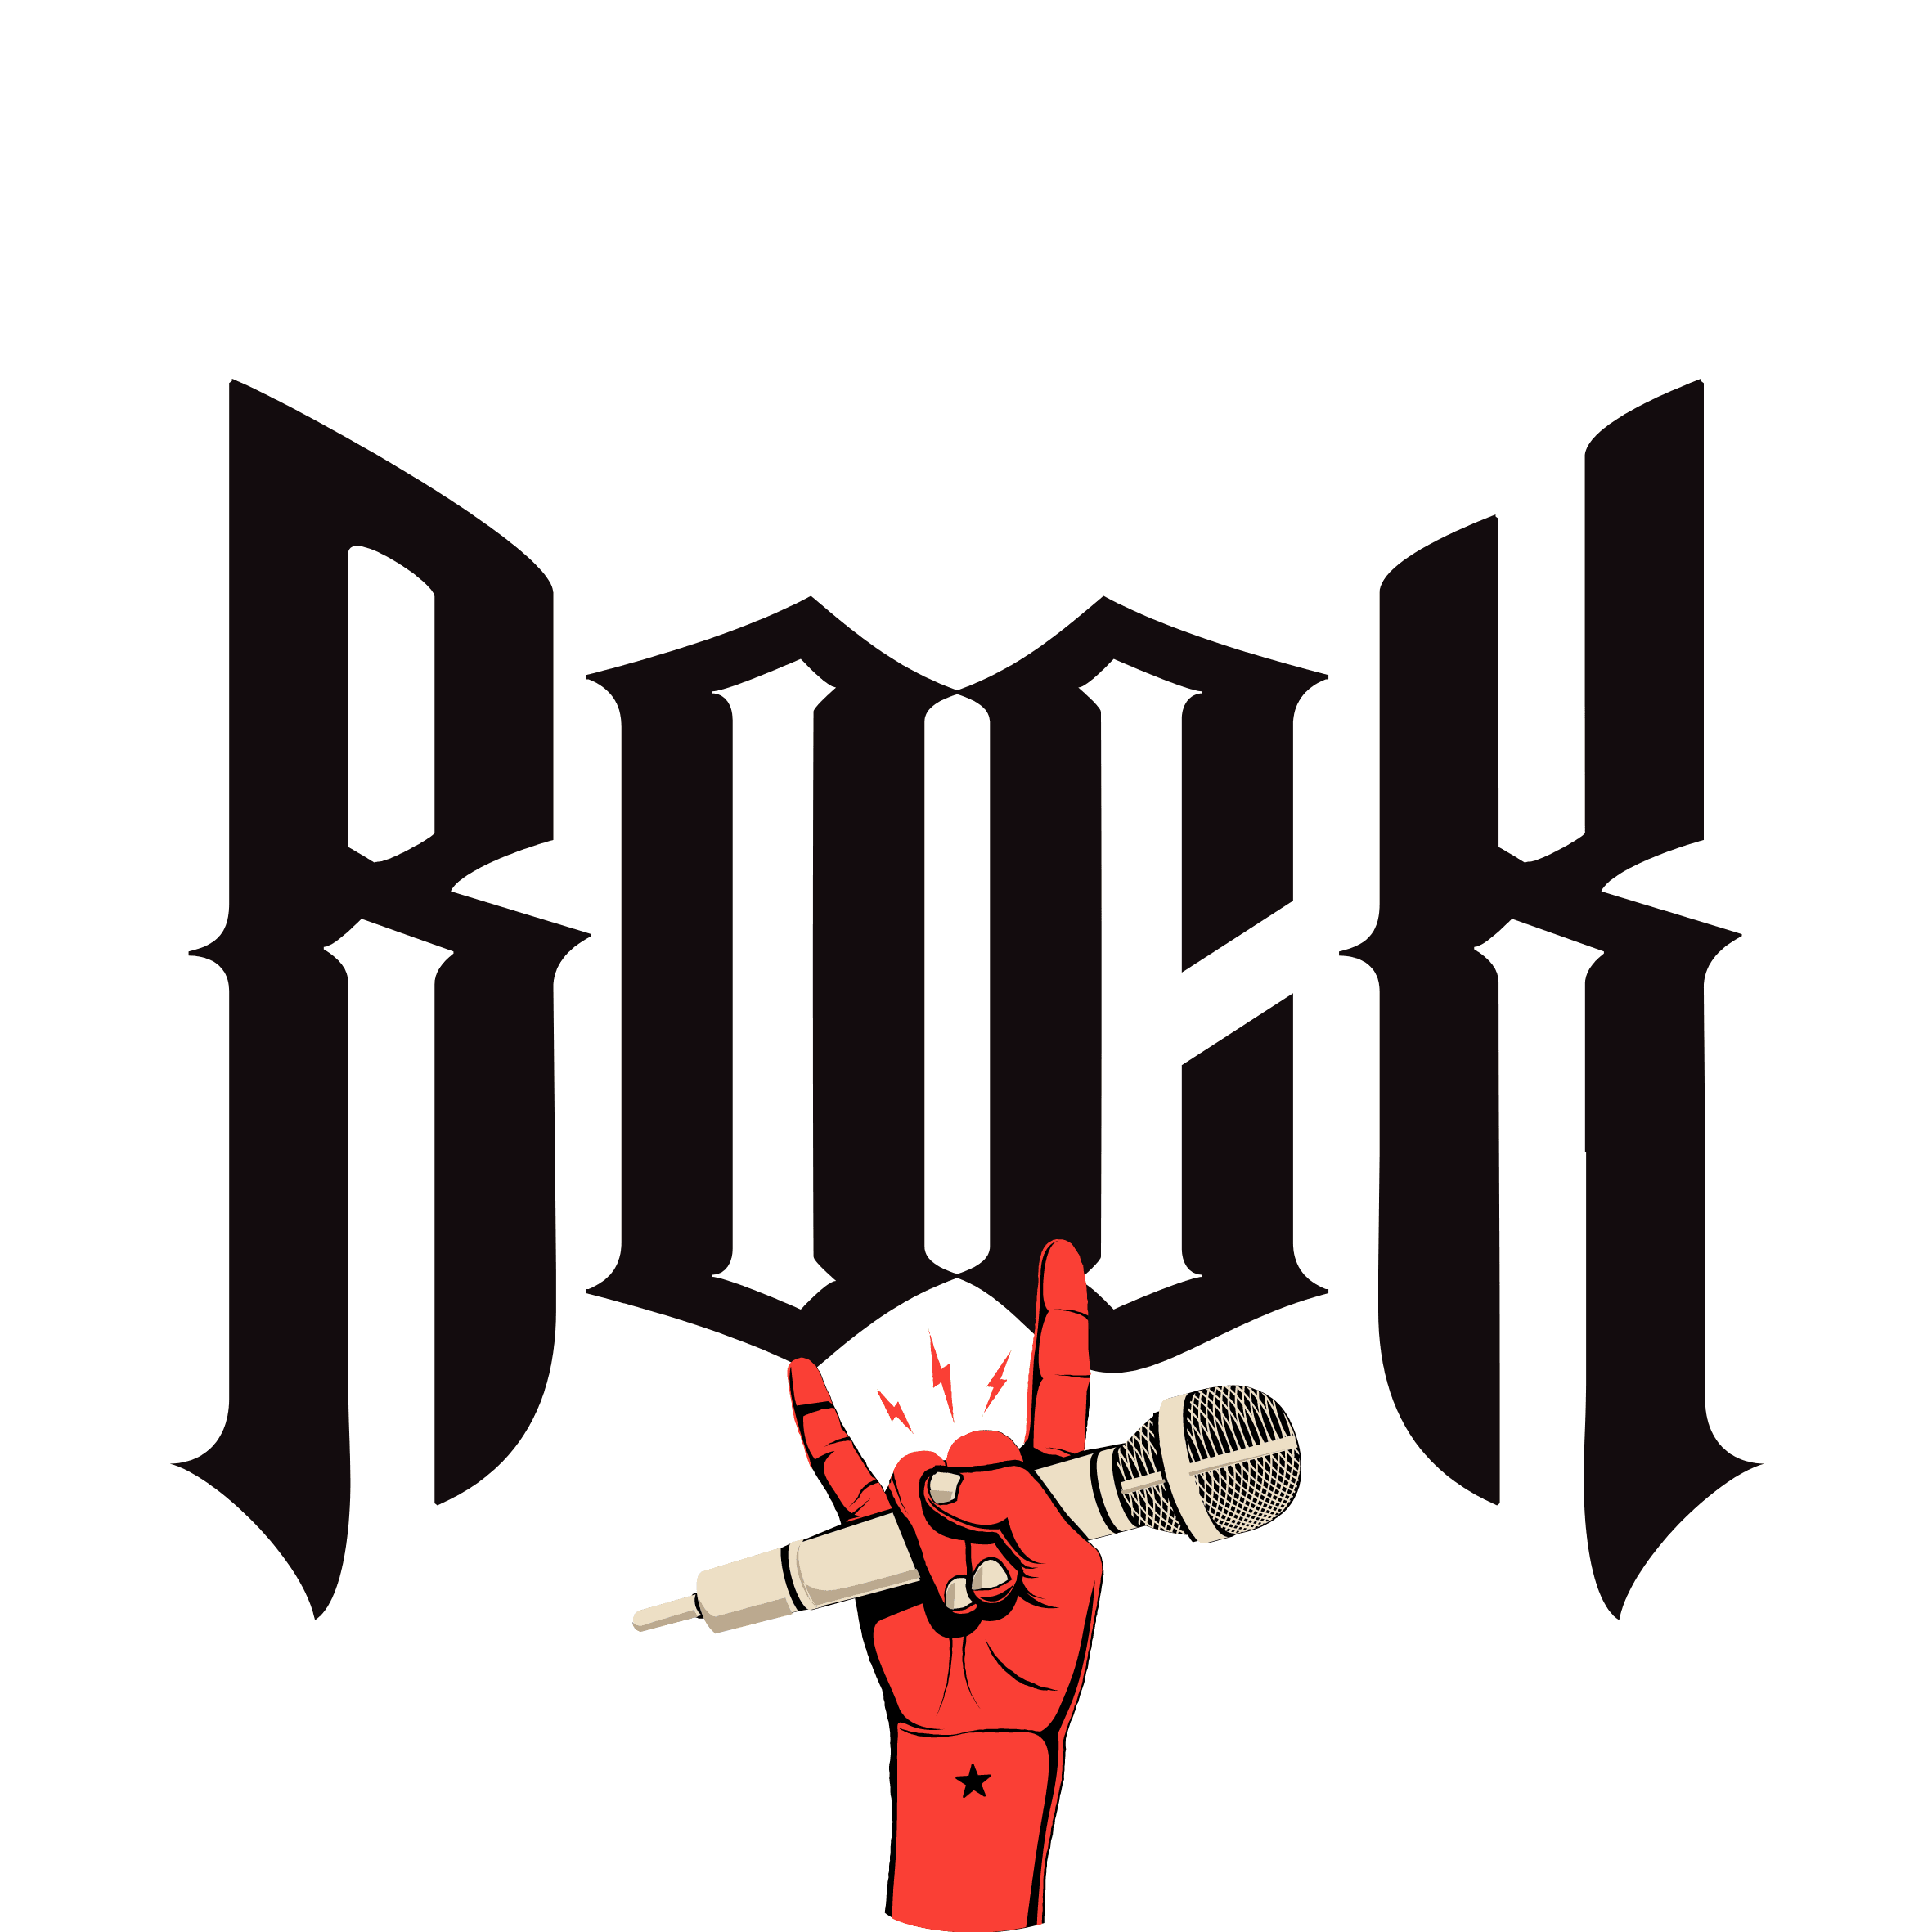 Rock and Hand sticker şeffaf 6 cm